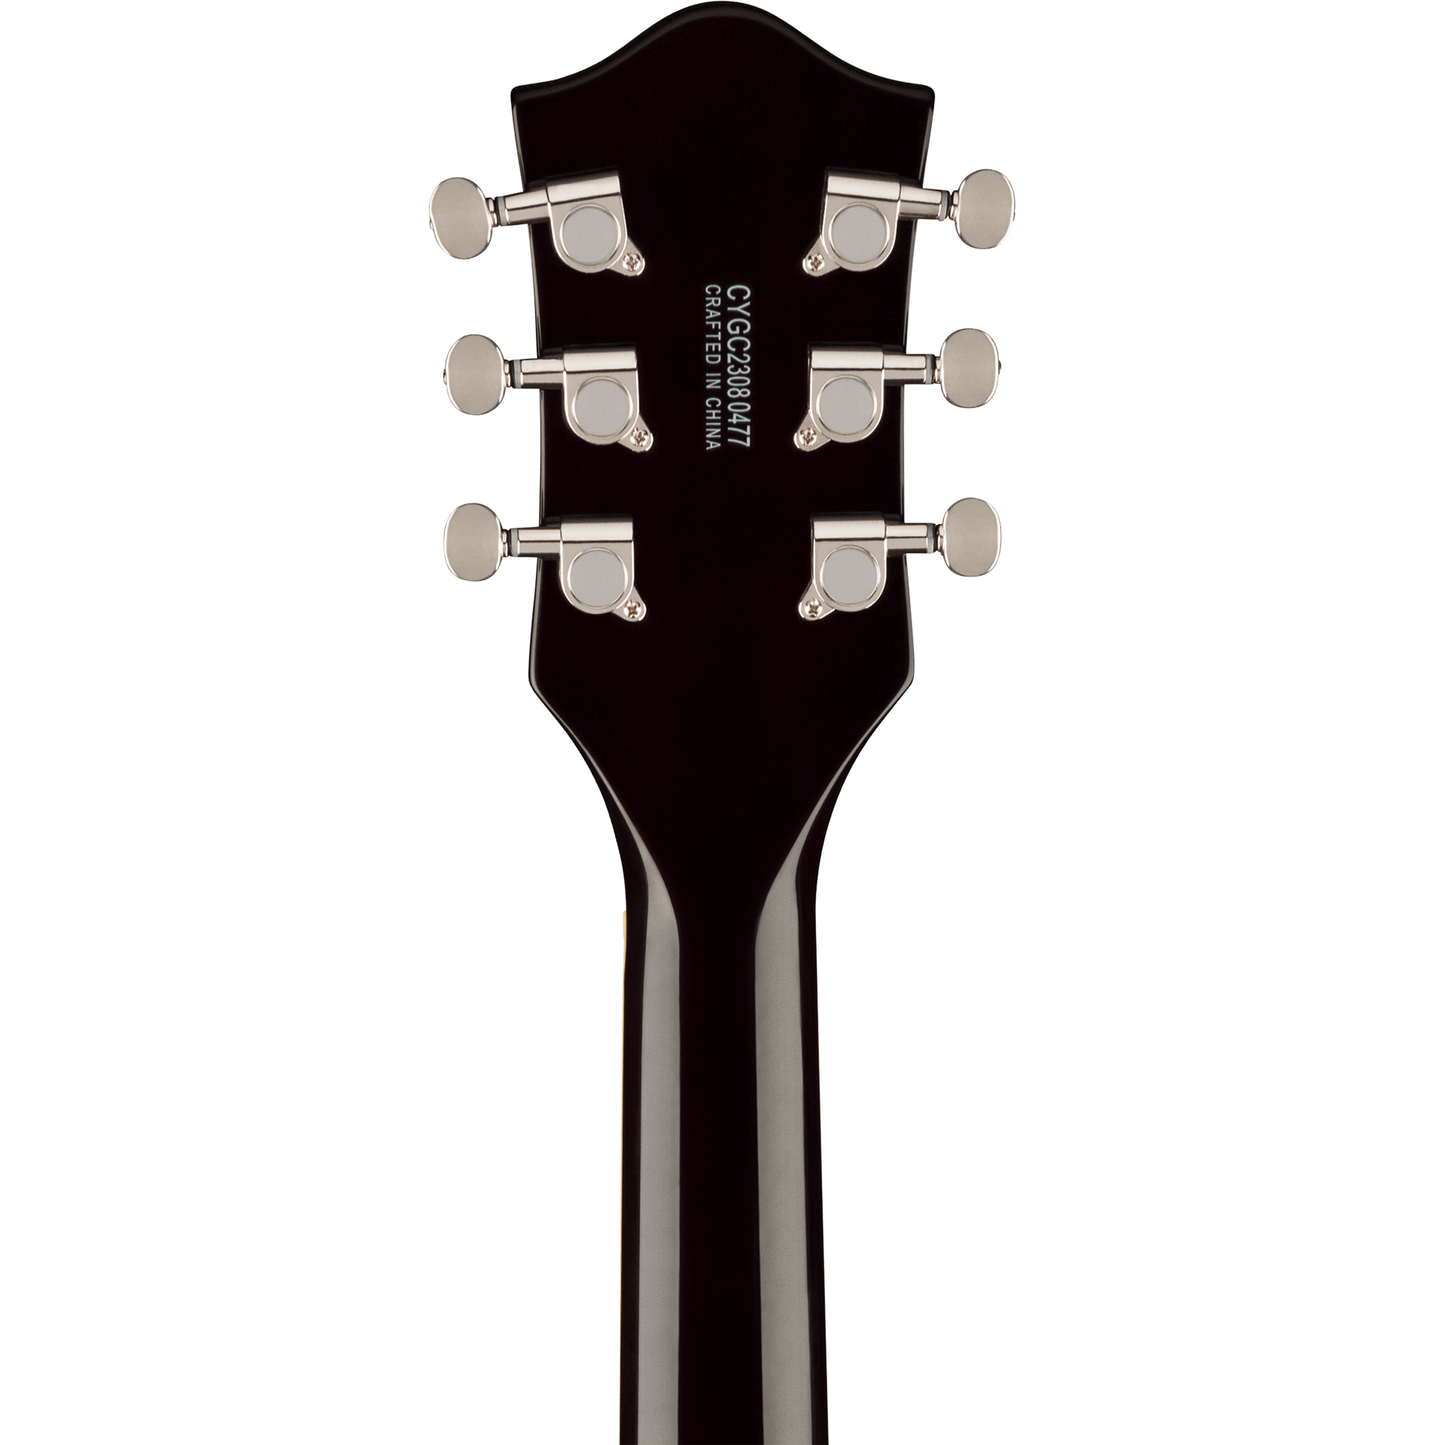 Gretsch G5622 Electromatic Center Block Double-Cut Guitar - Claret Burst